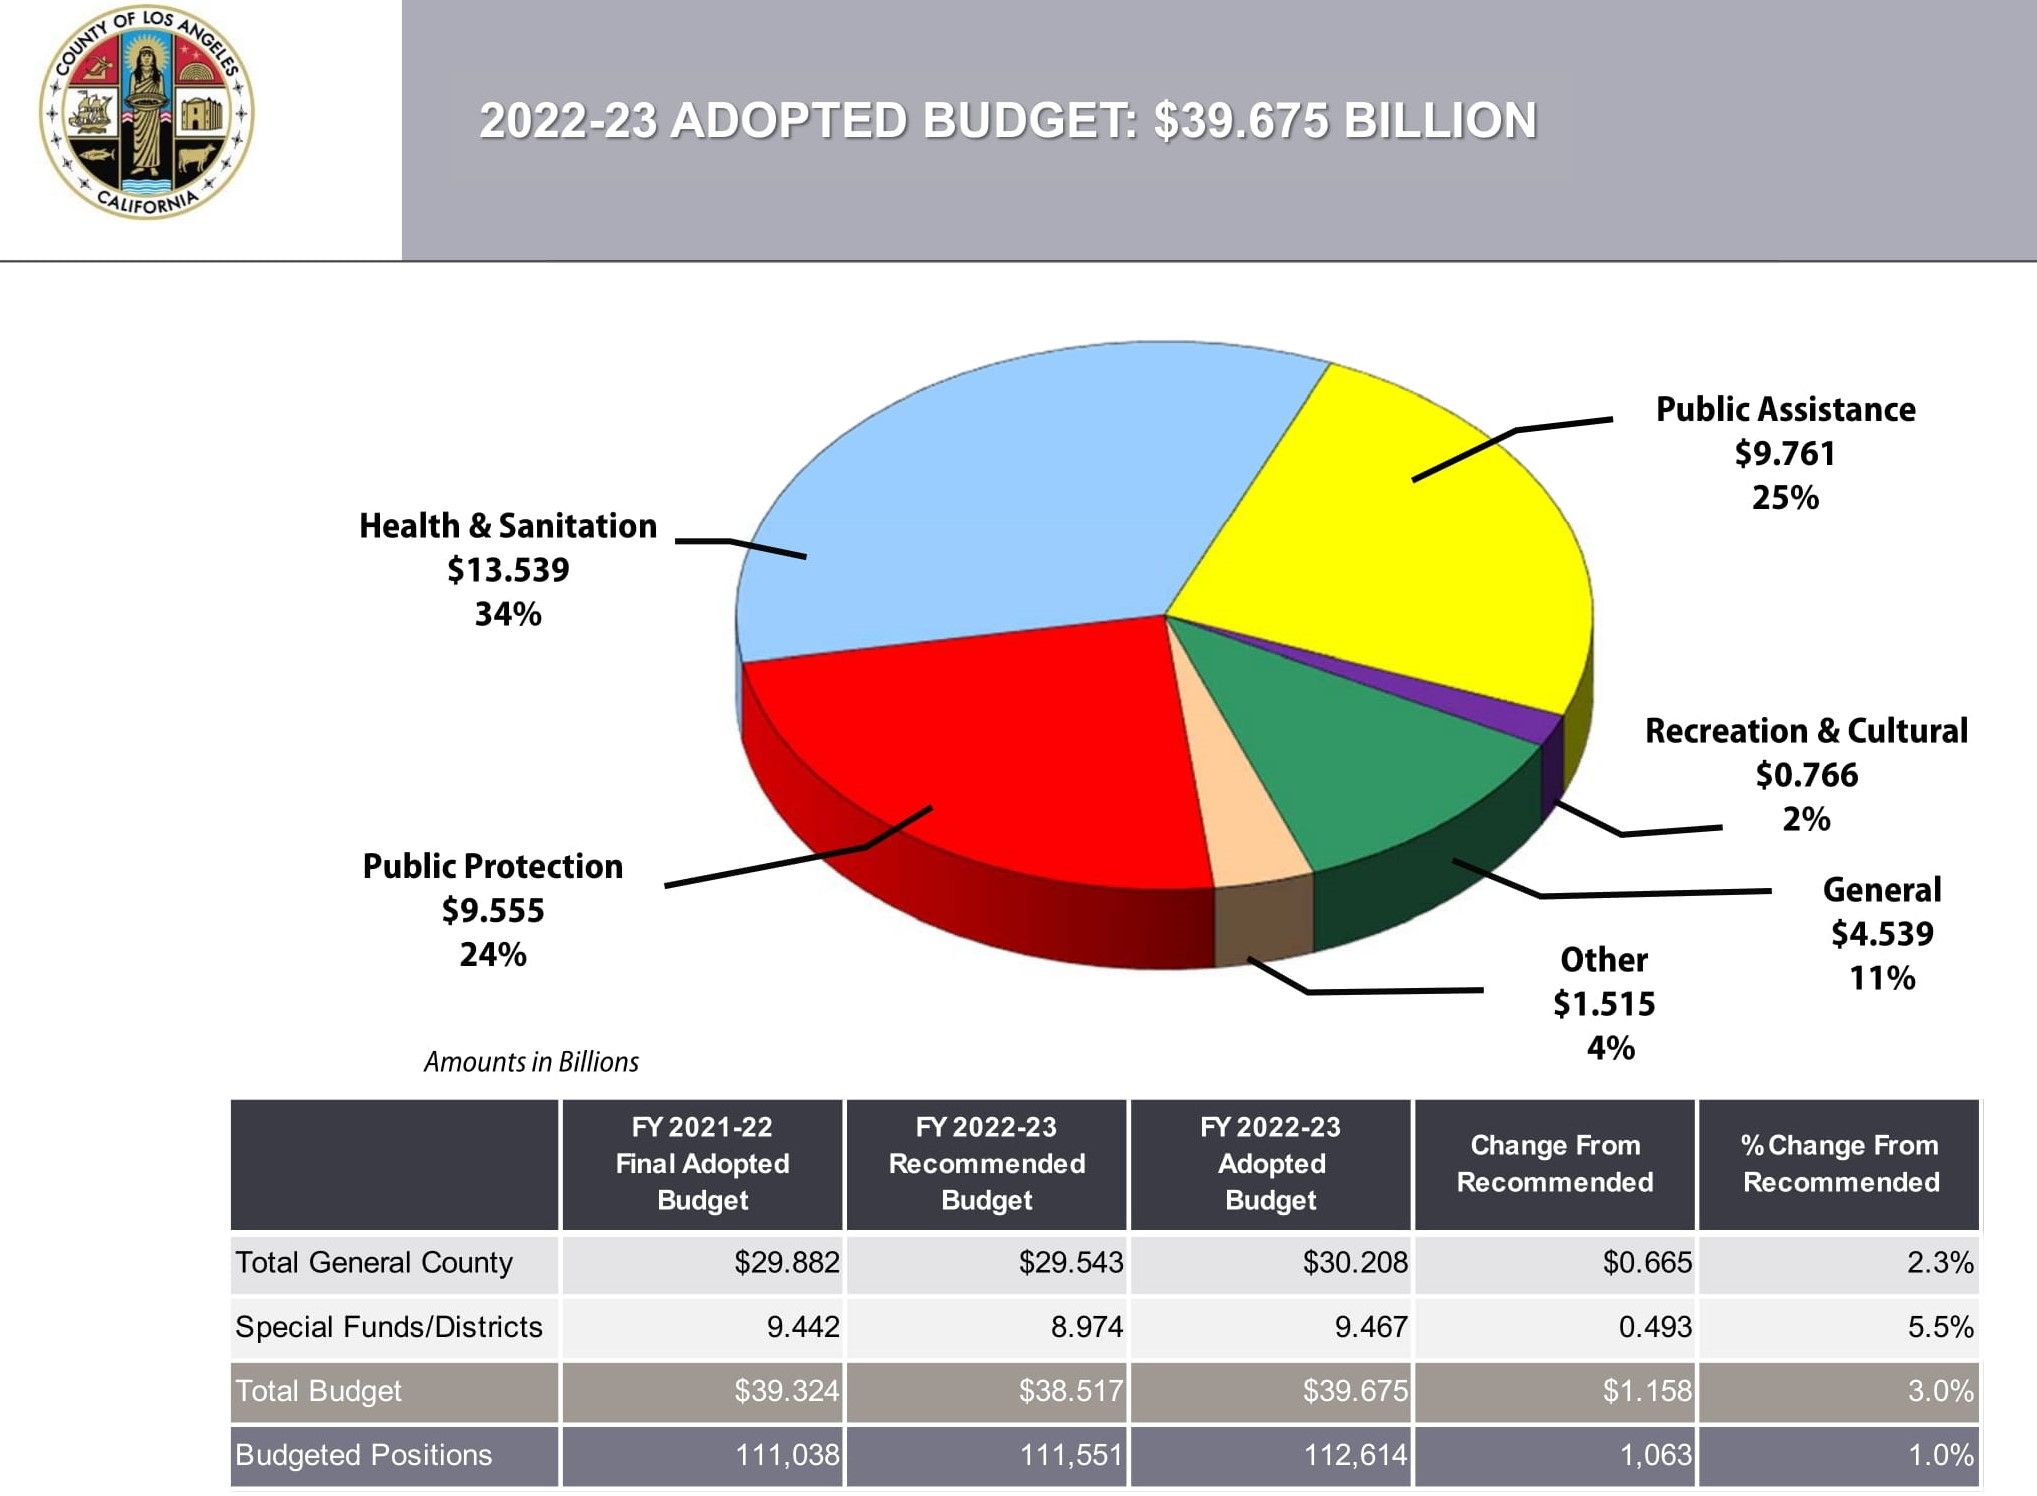 2022-23 Adopted Budget: $39.675 Billion